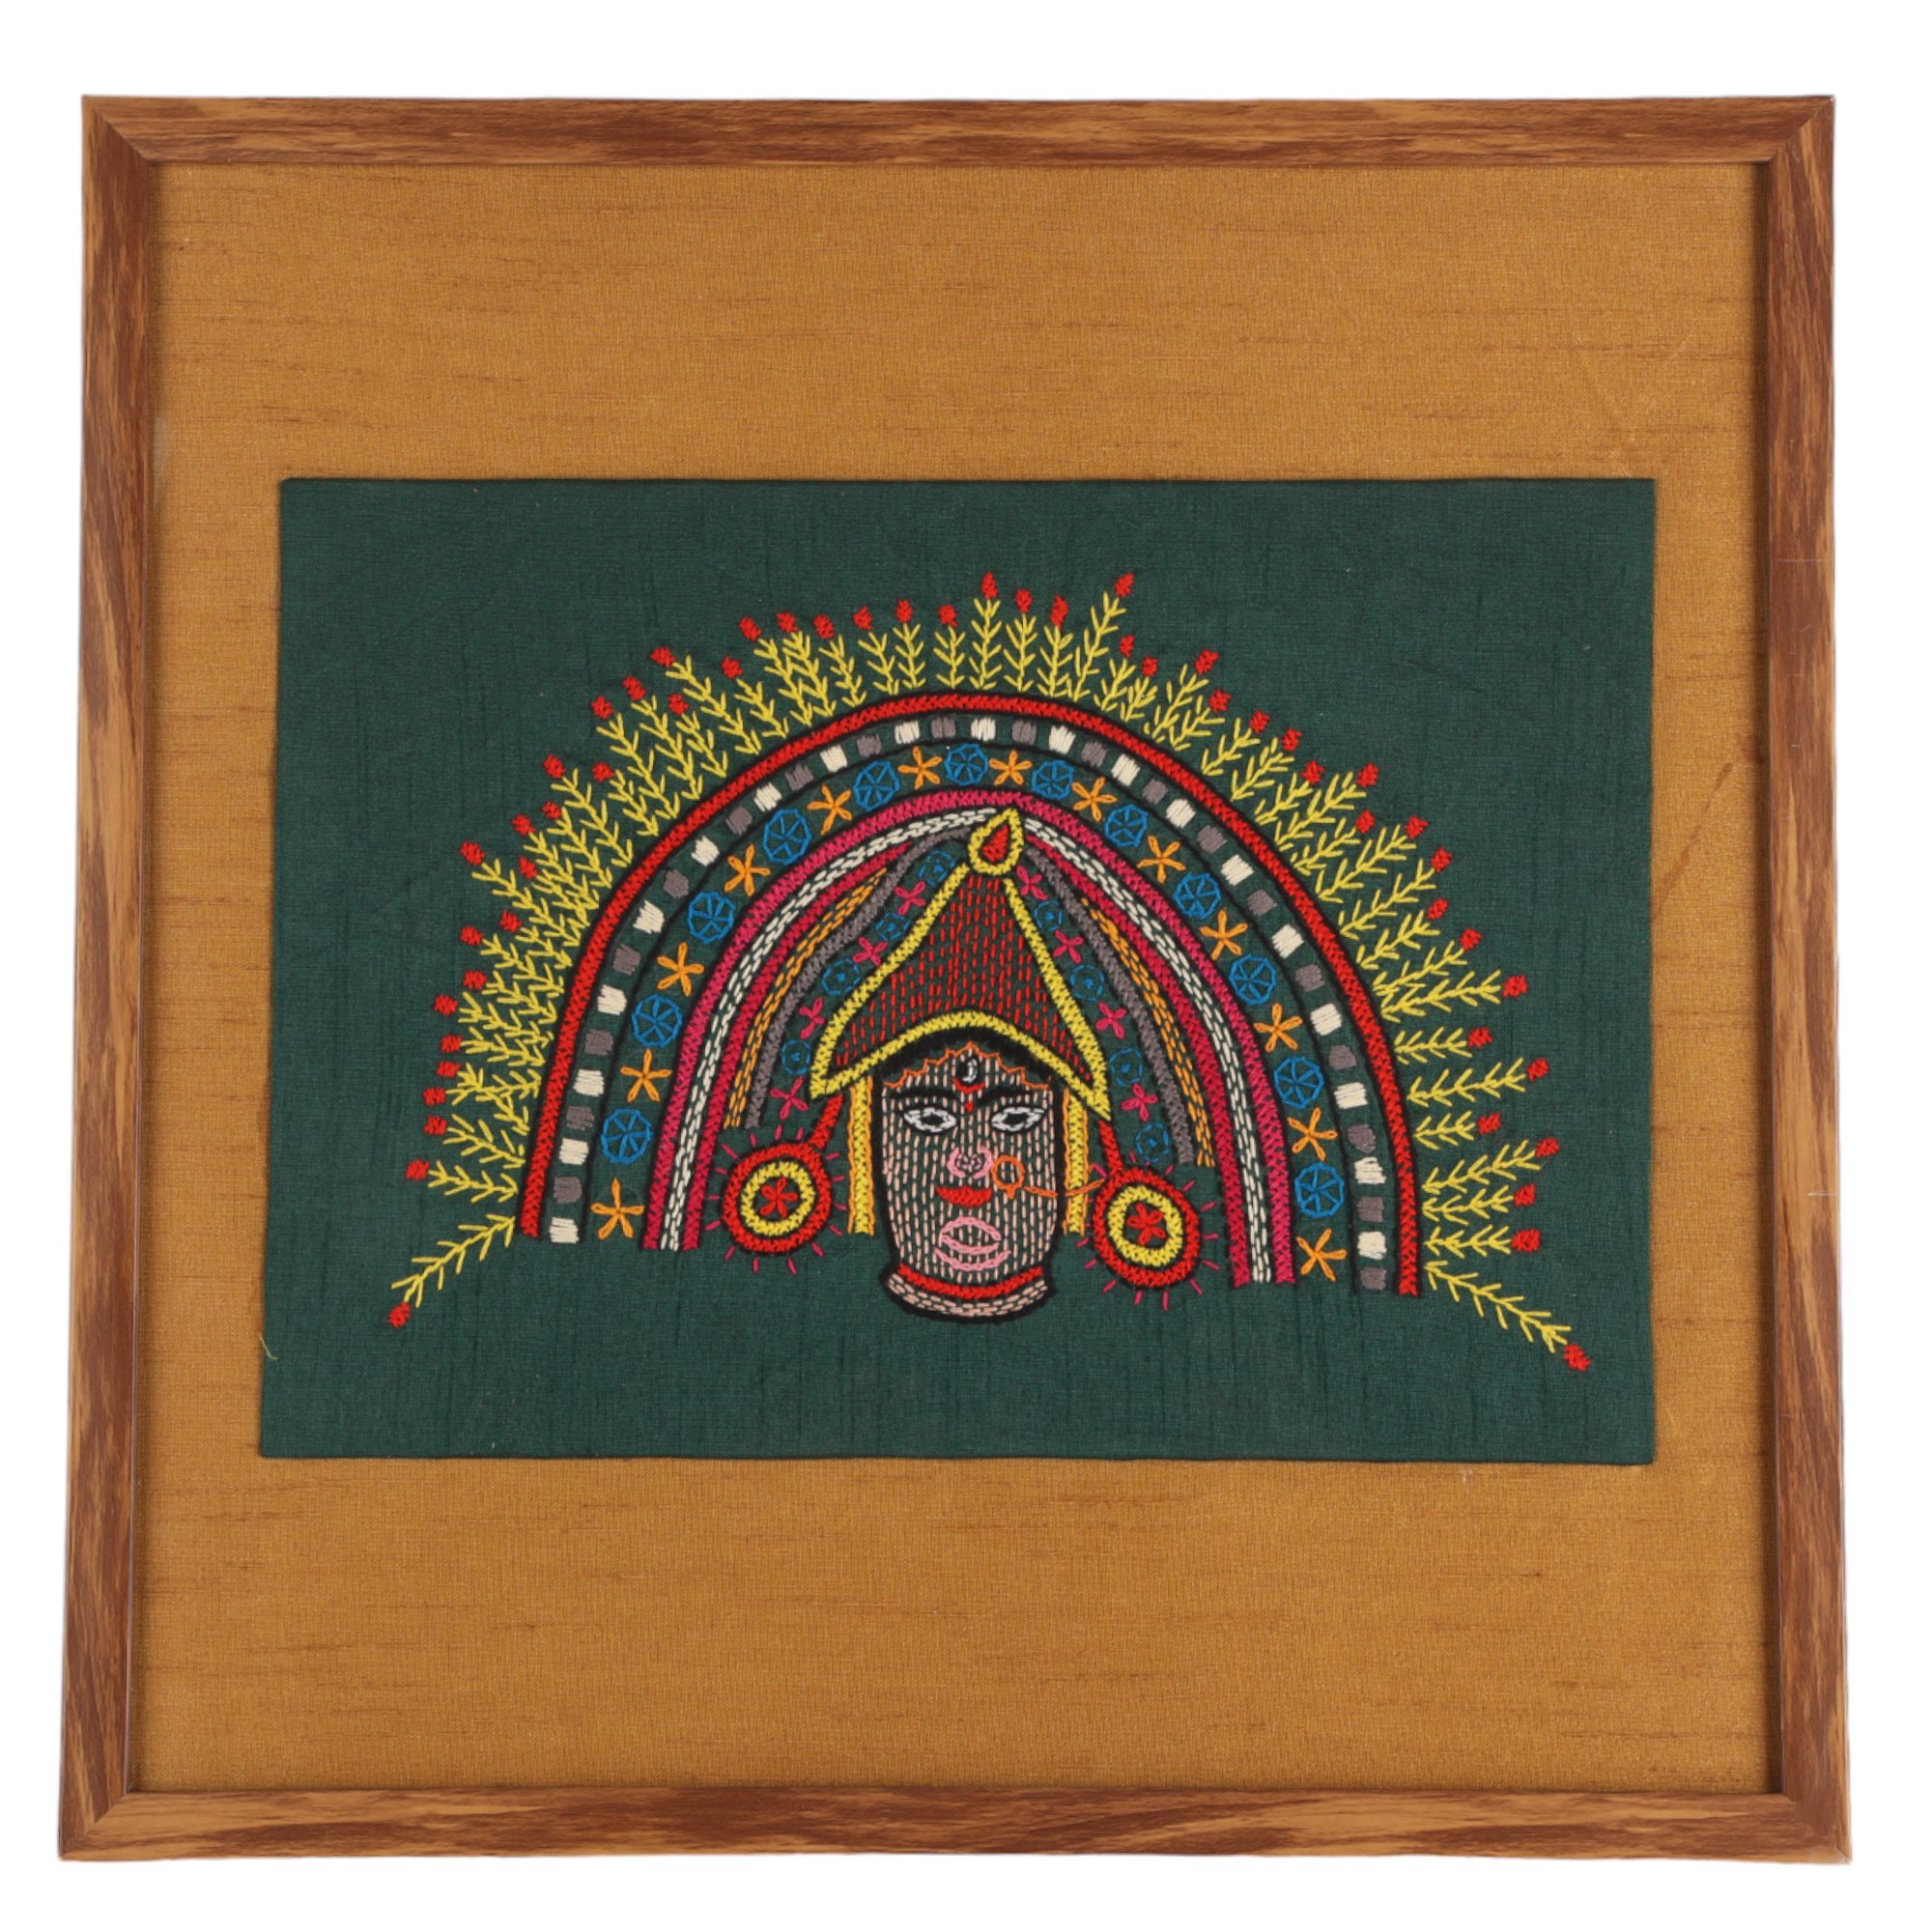 Shop INDHA Wood Wall Decor Gift Maa-Durga Embroidery